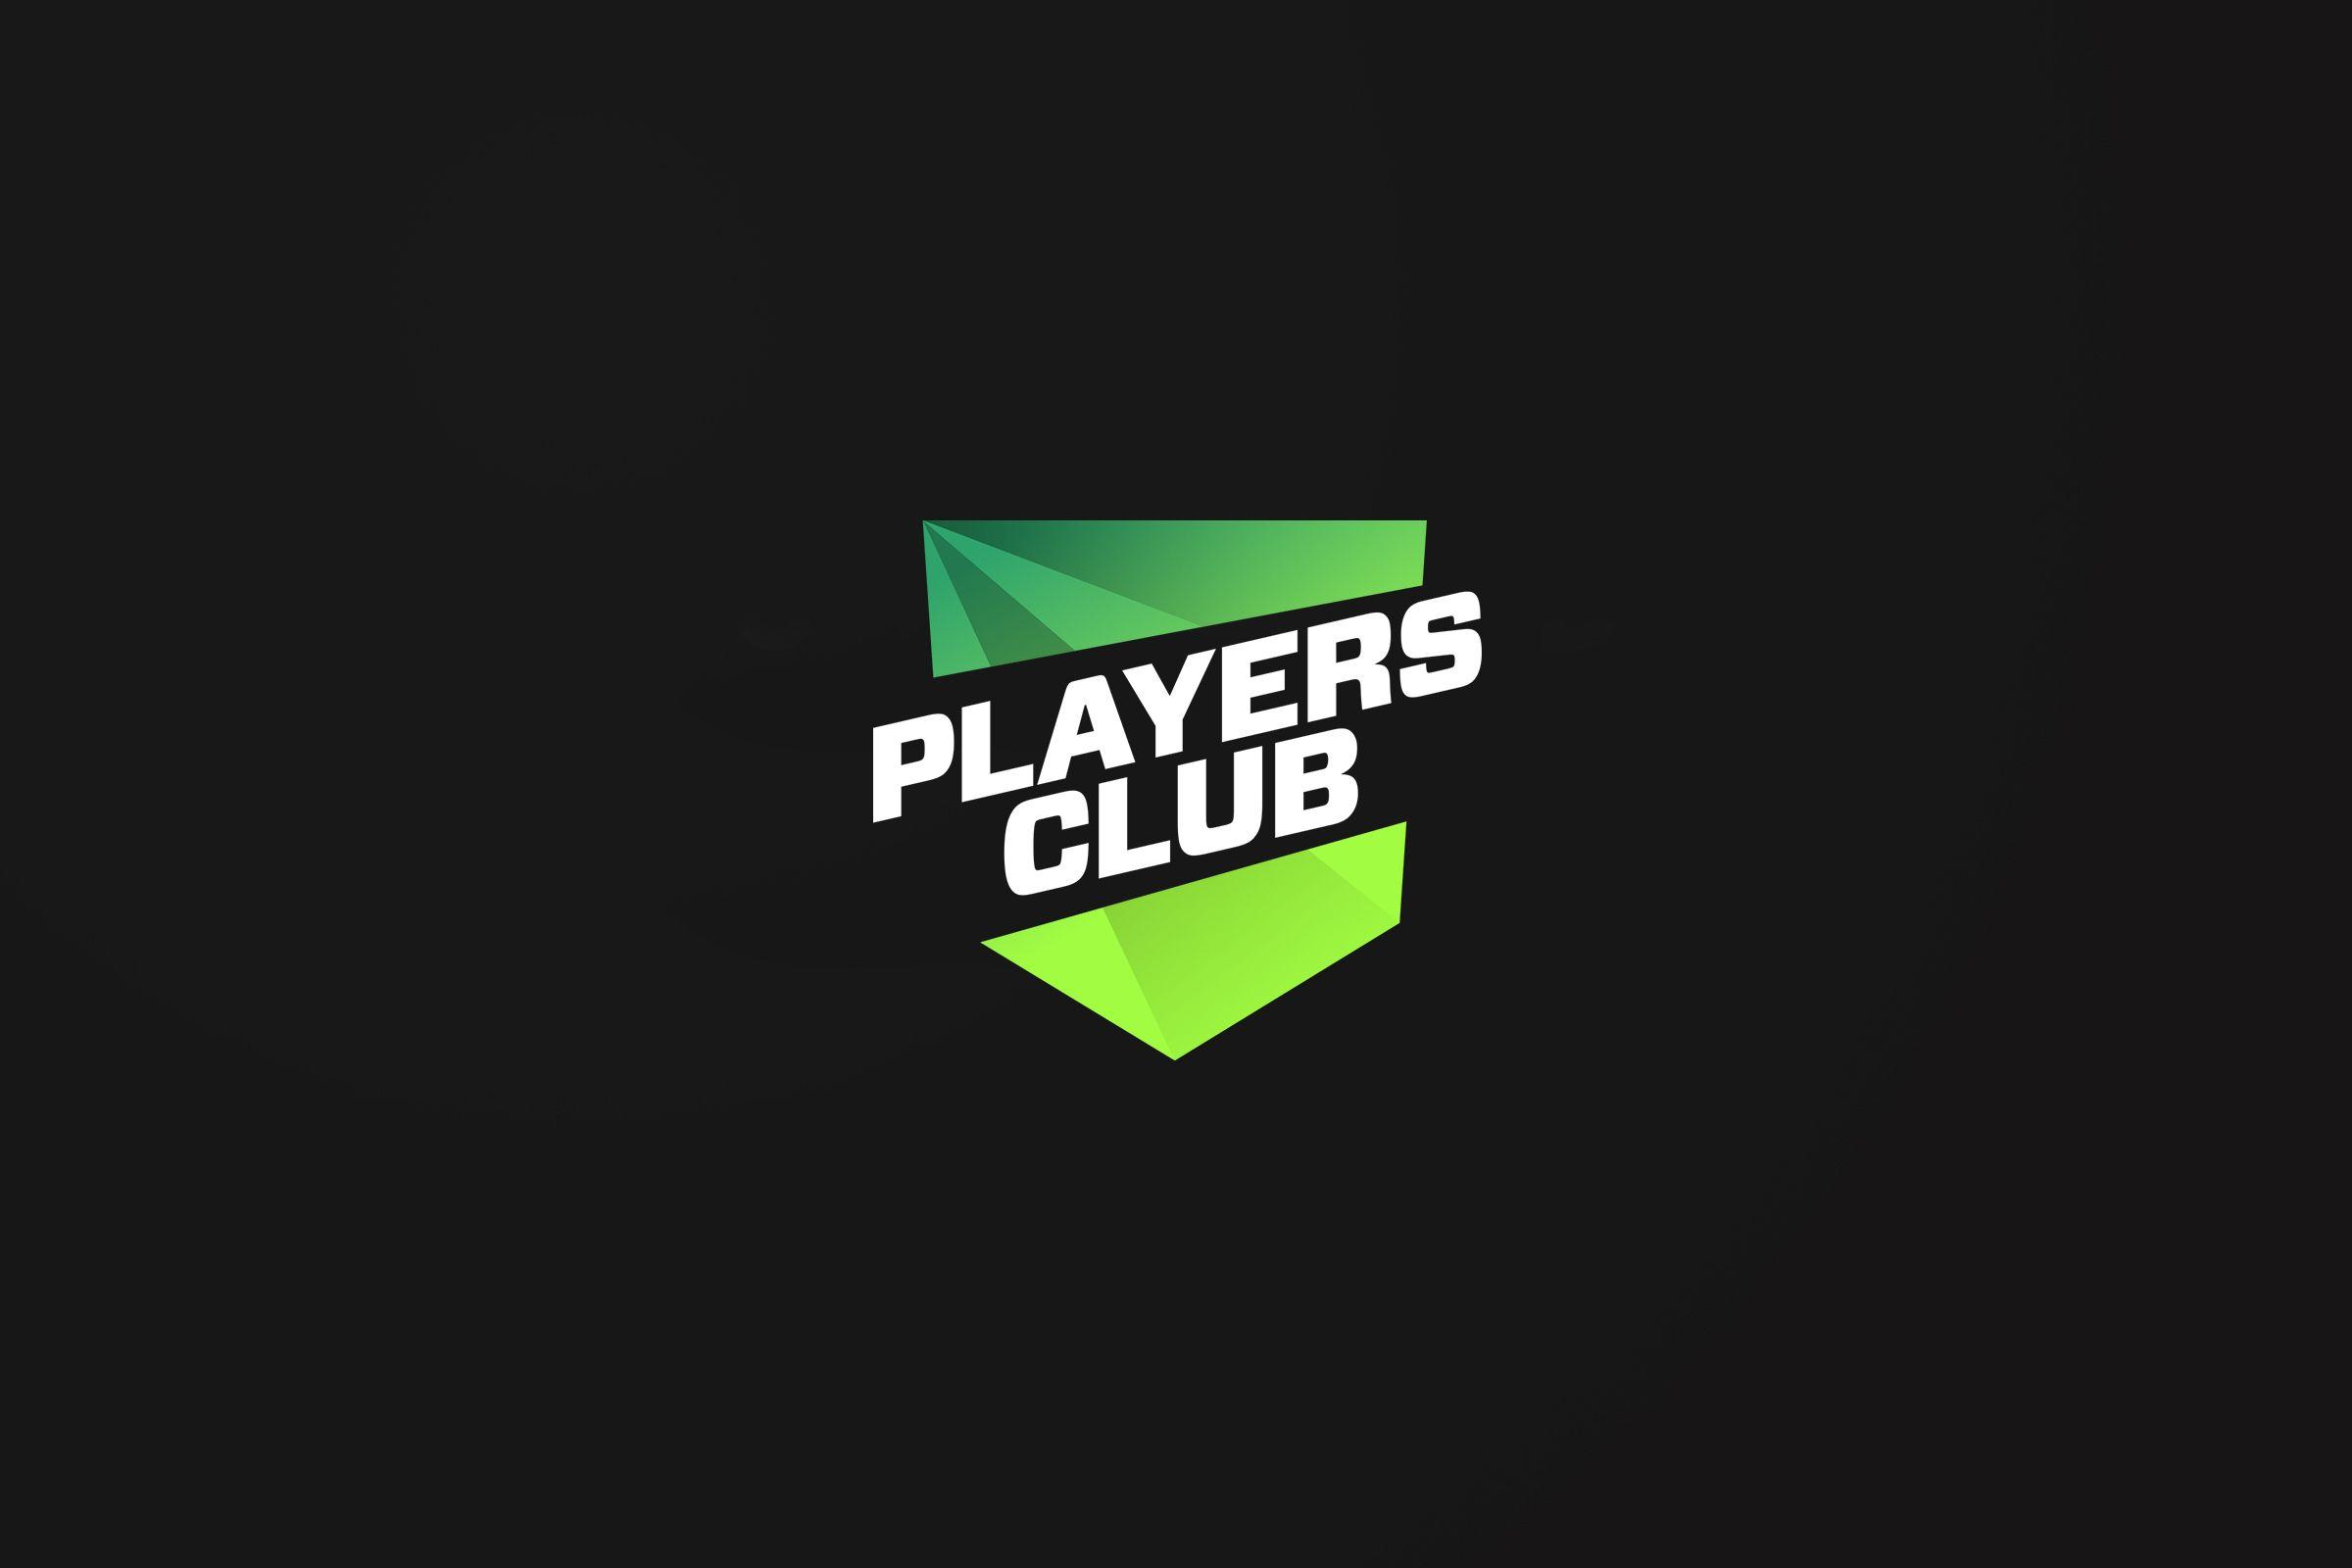 TaylorMade-adidas Logo - Players Club